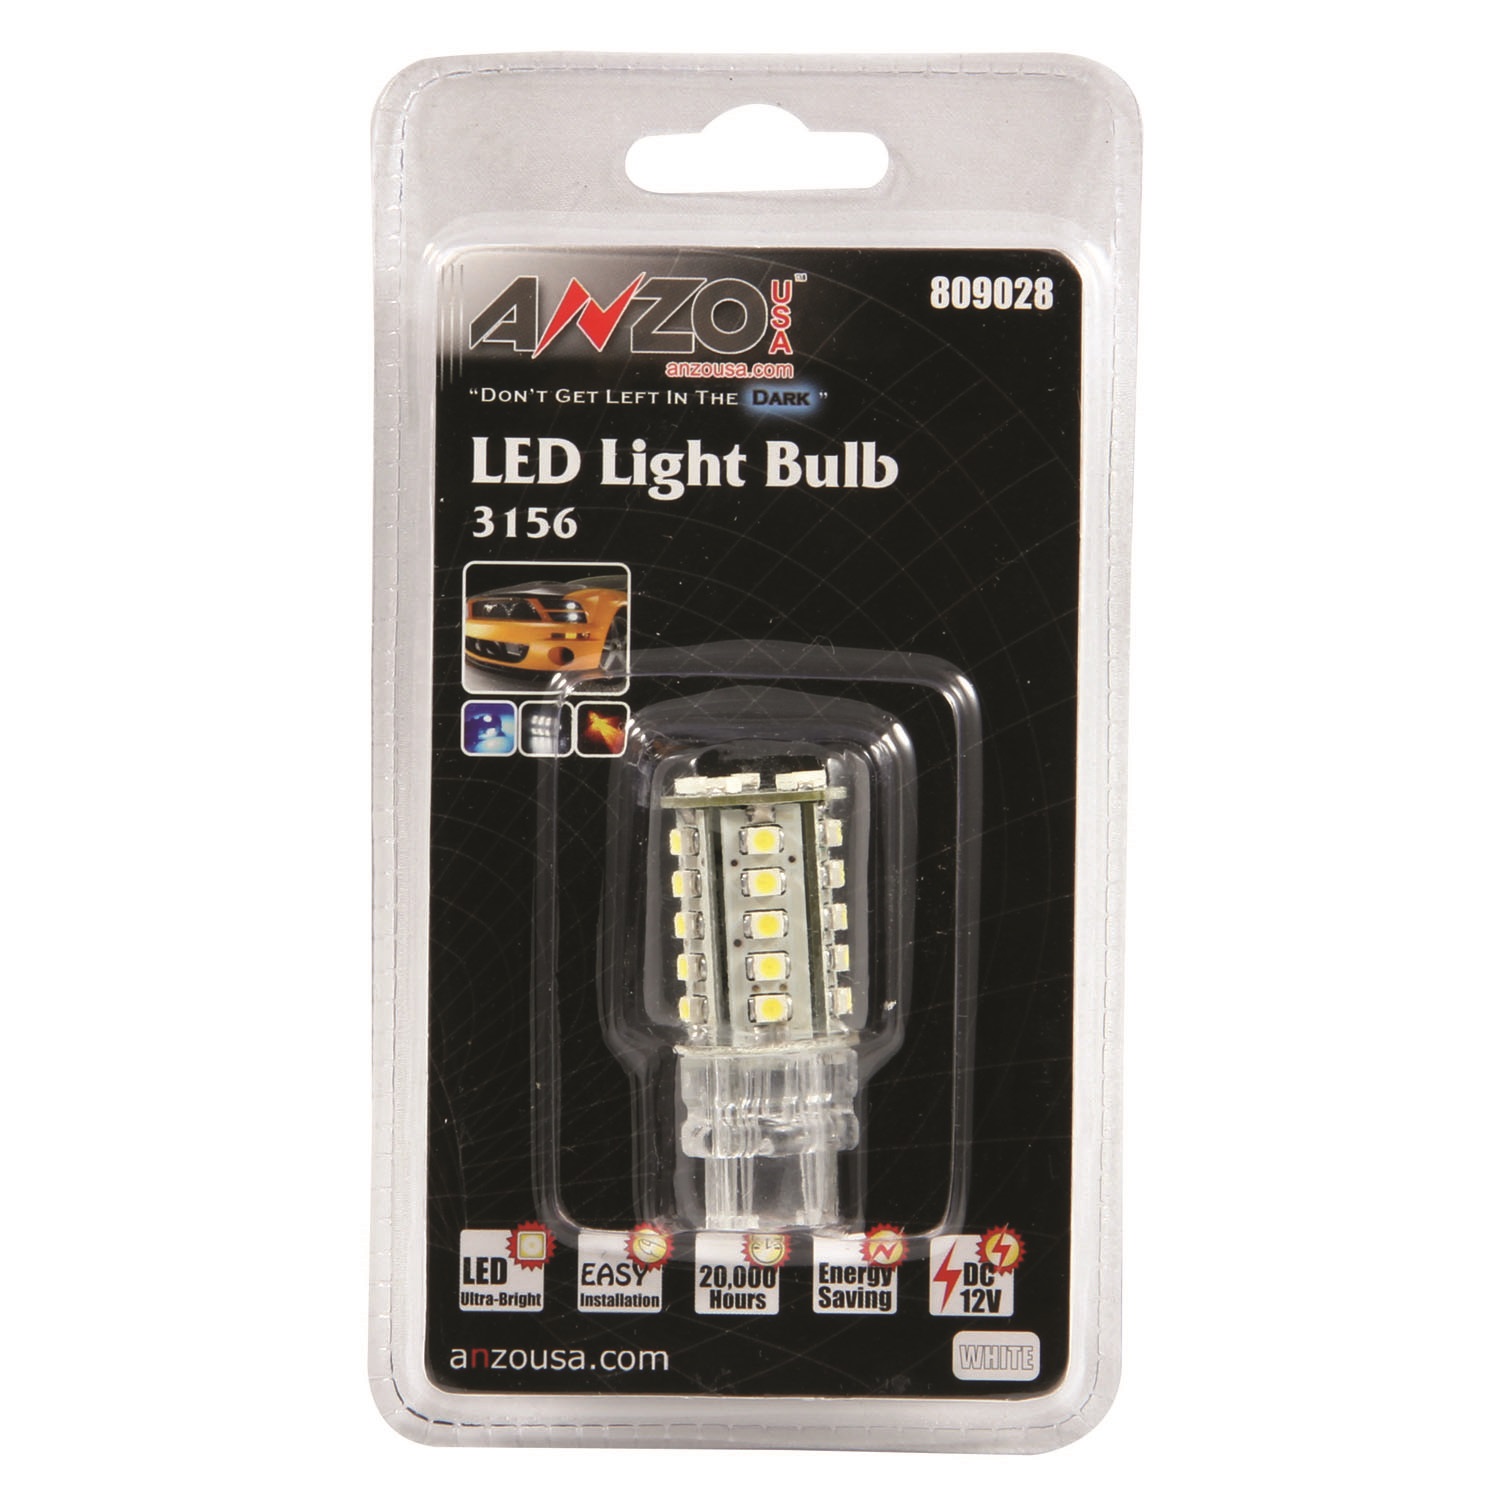 Anzo USA Anzo USA 809028 LED Replacement Bulb